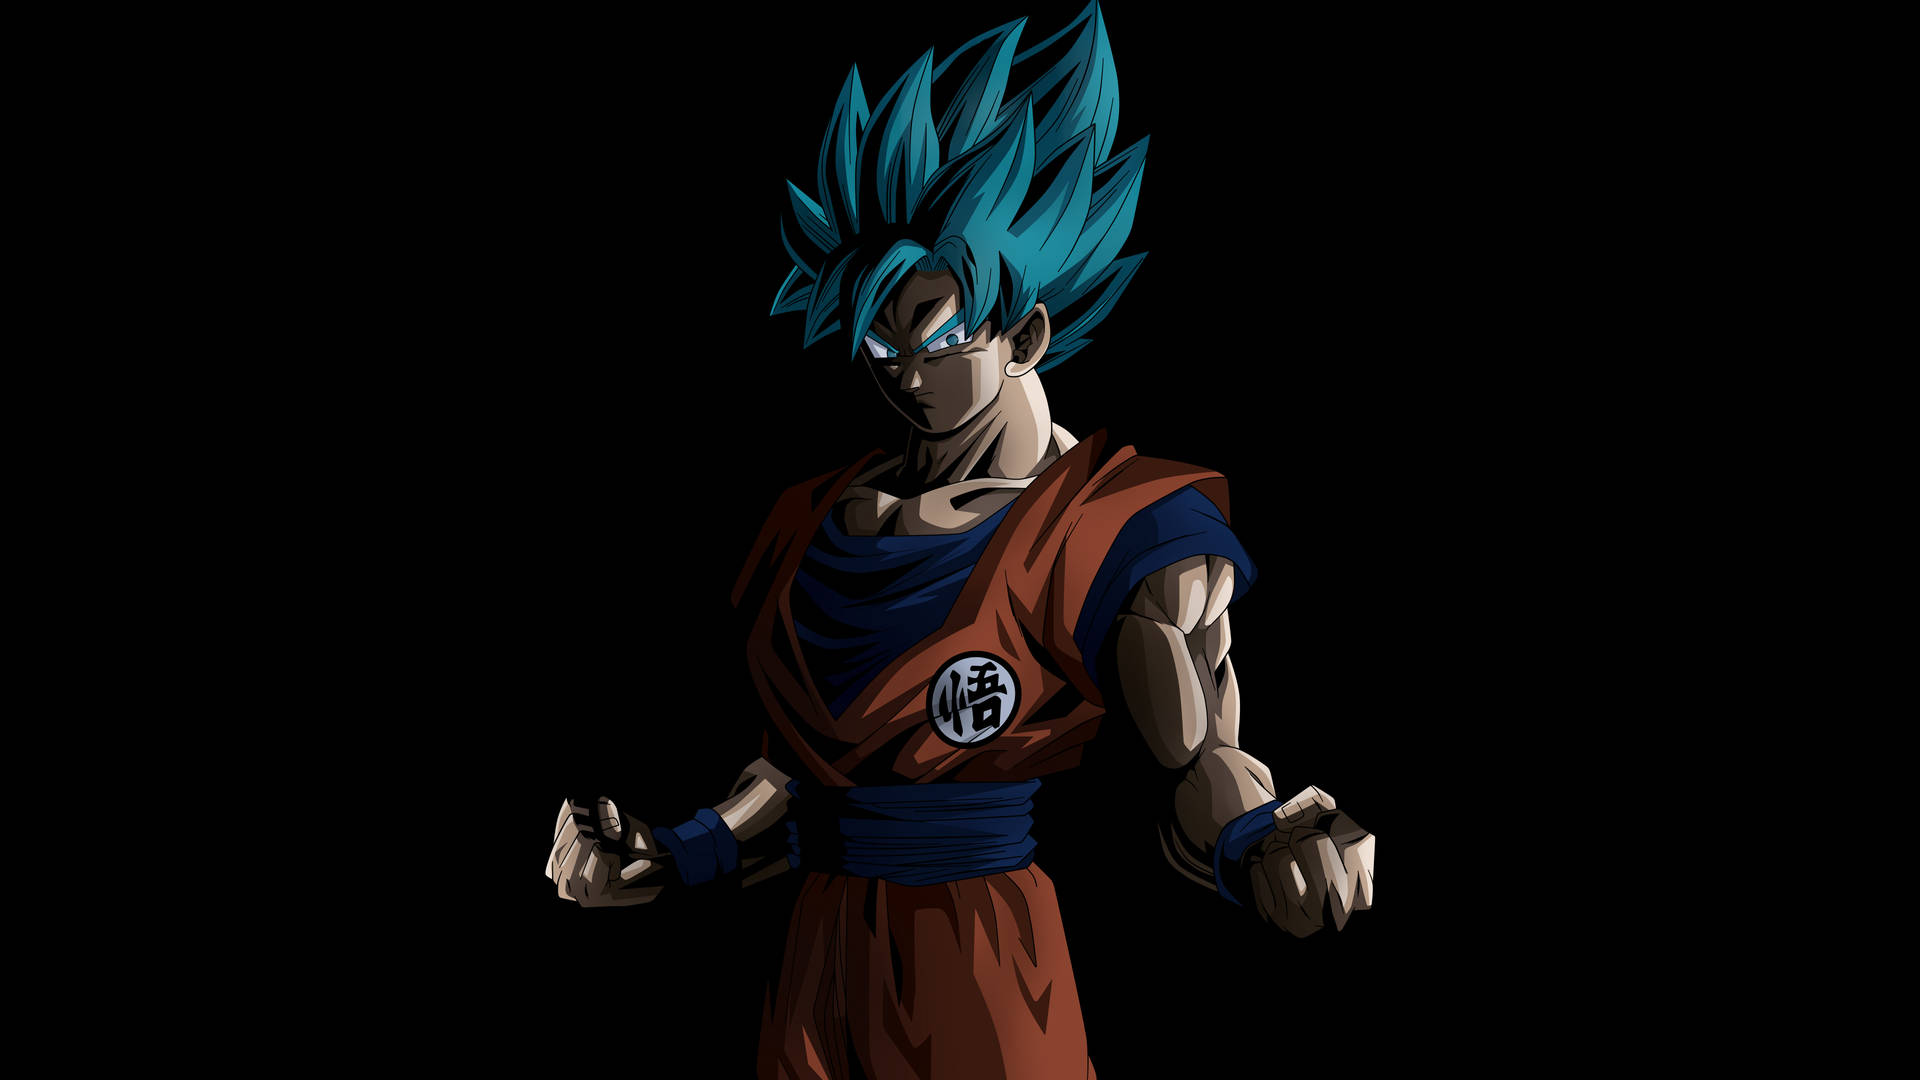 Dark Aesthetic Goku Super Saiyan Background